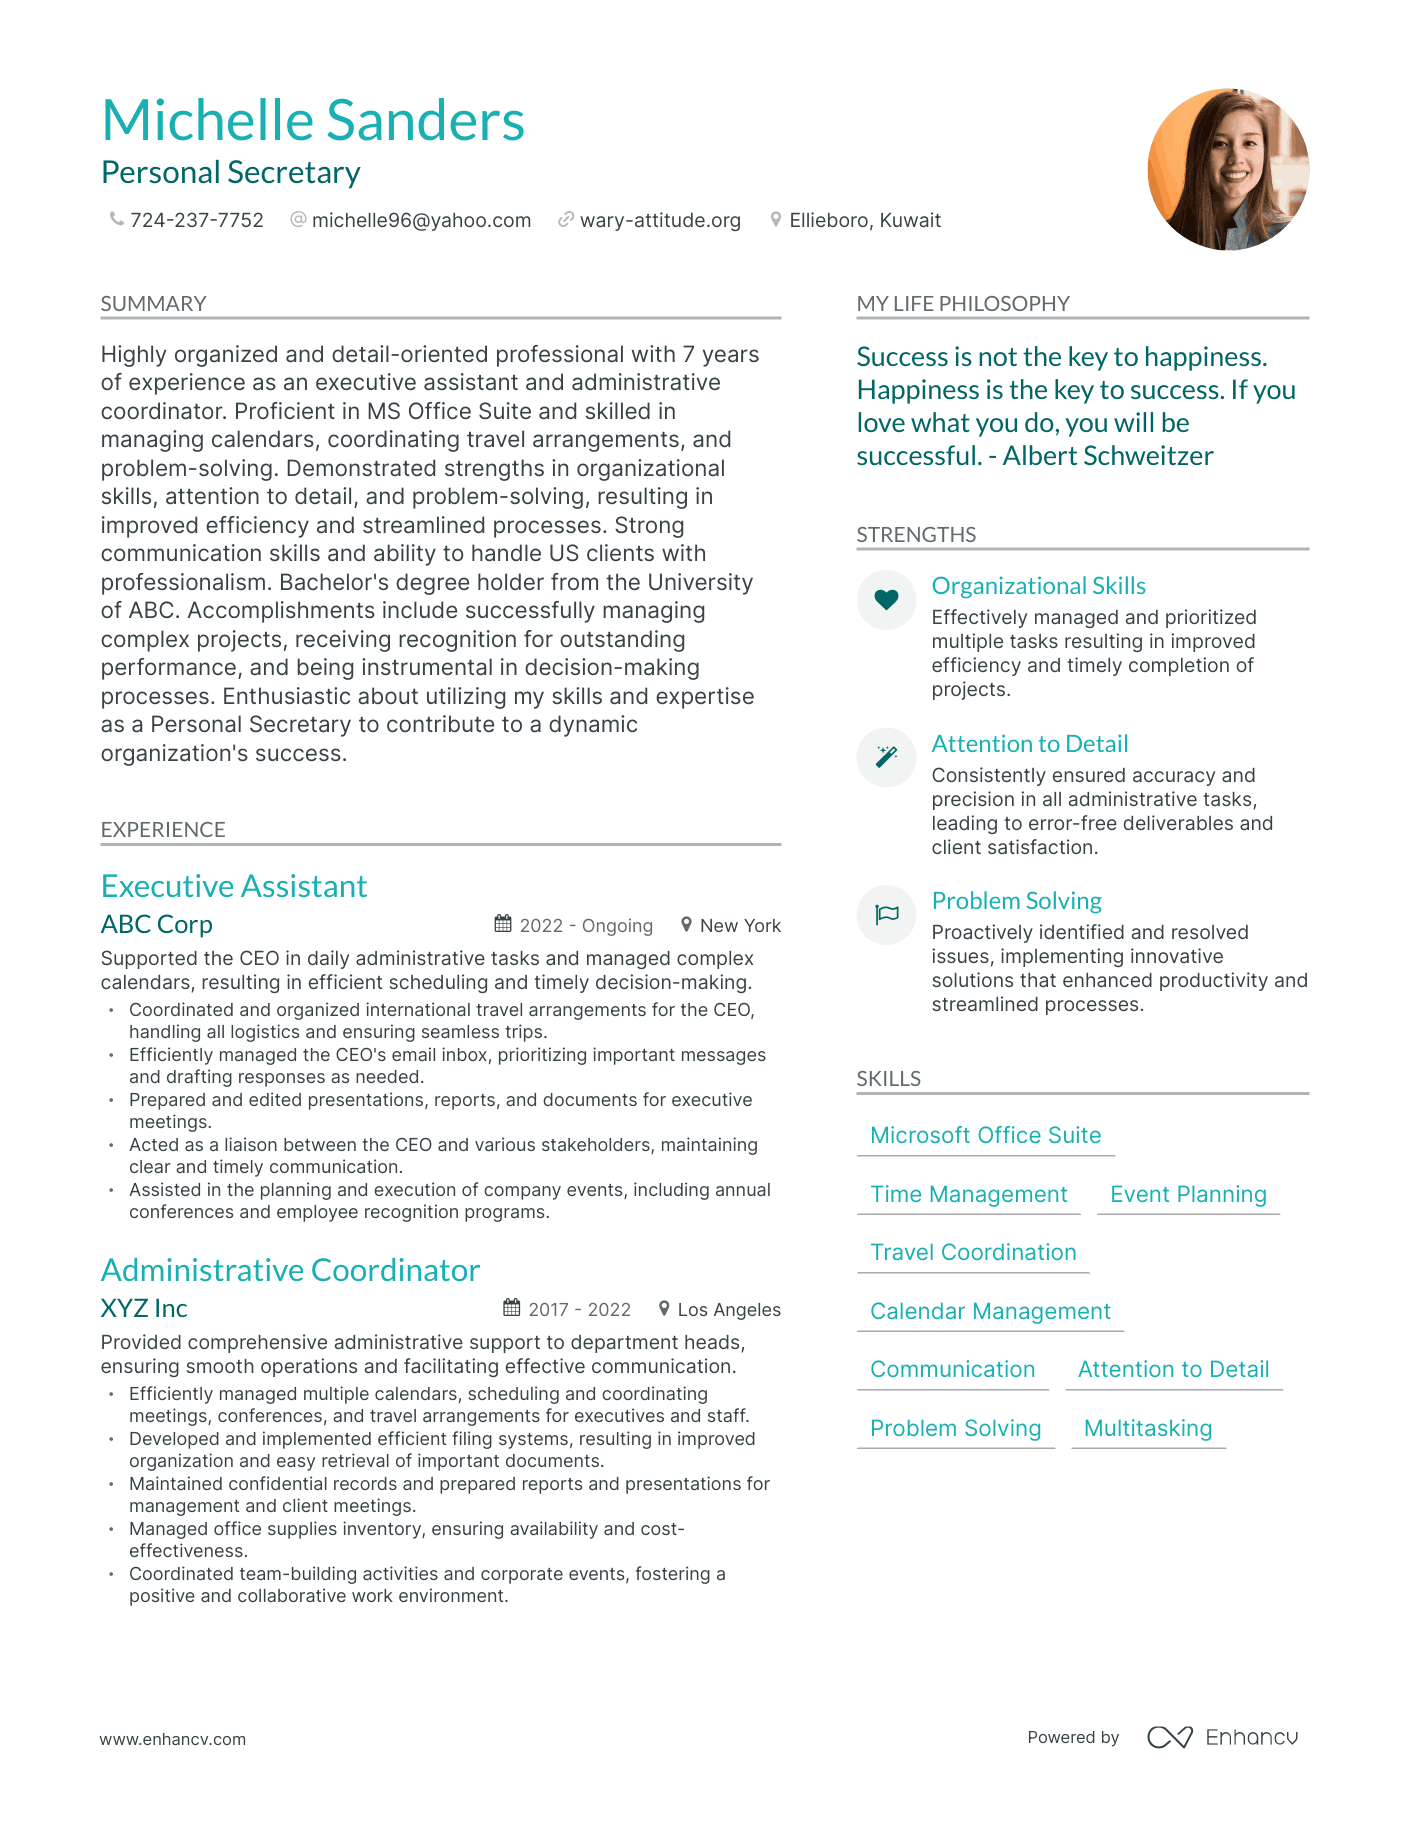 Personal Secretary resume example